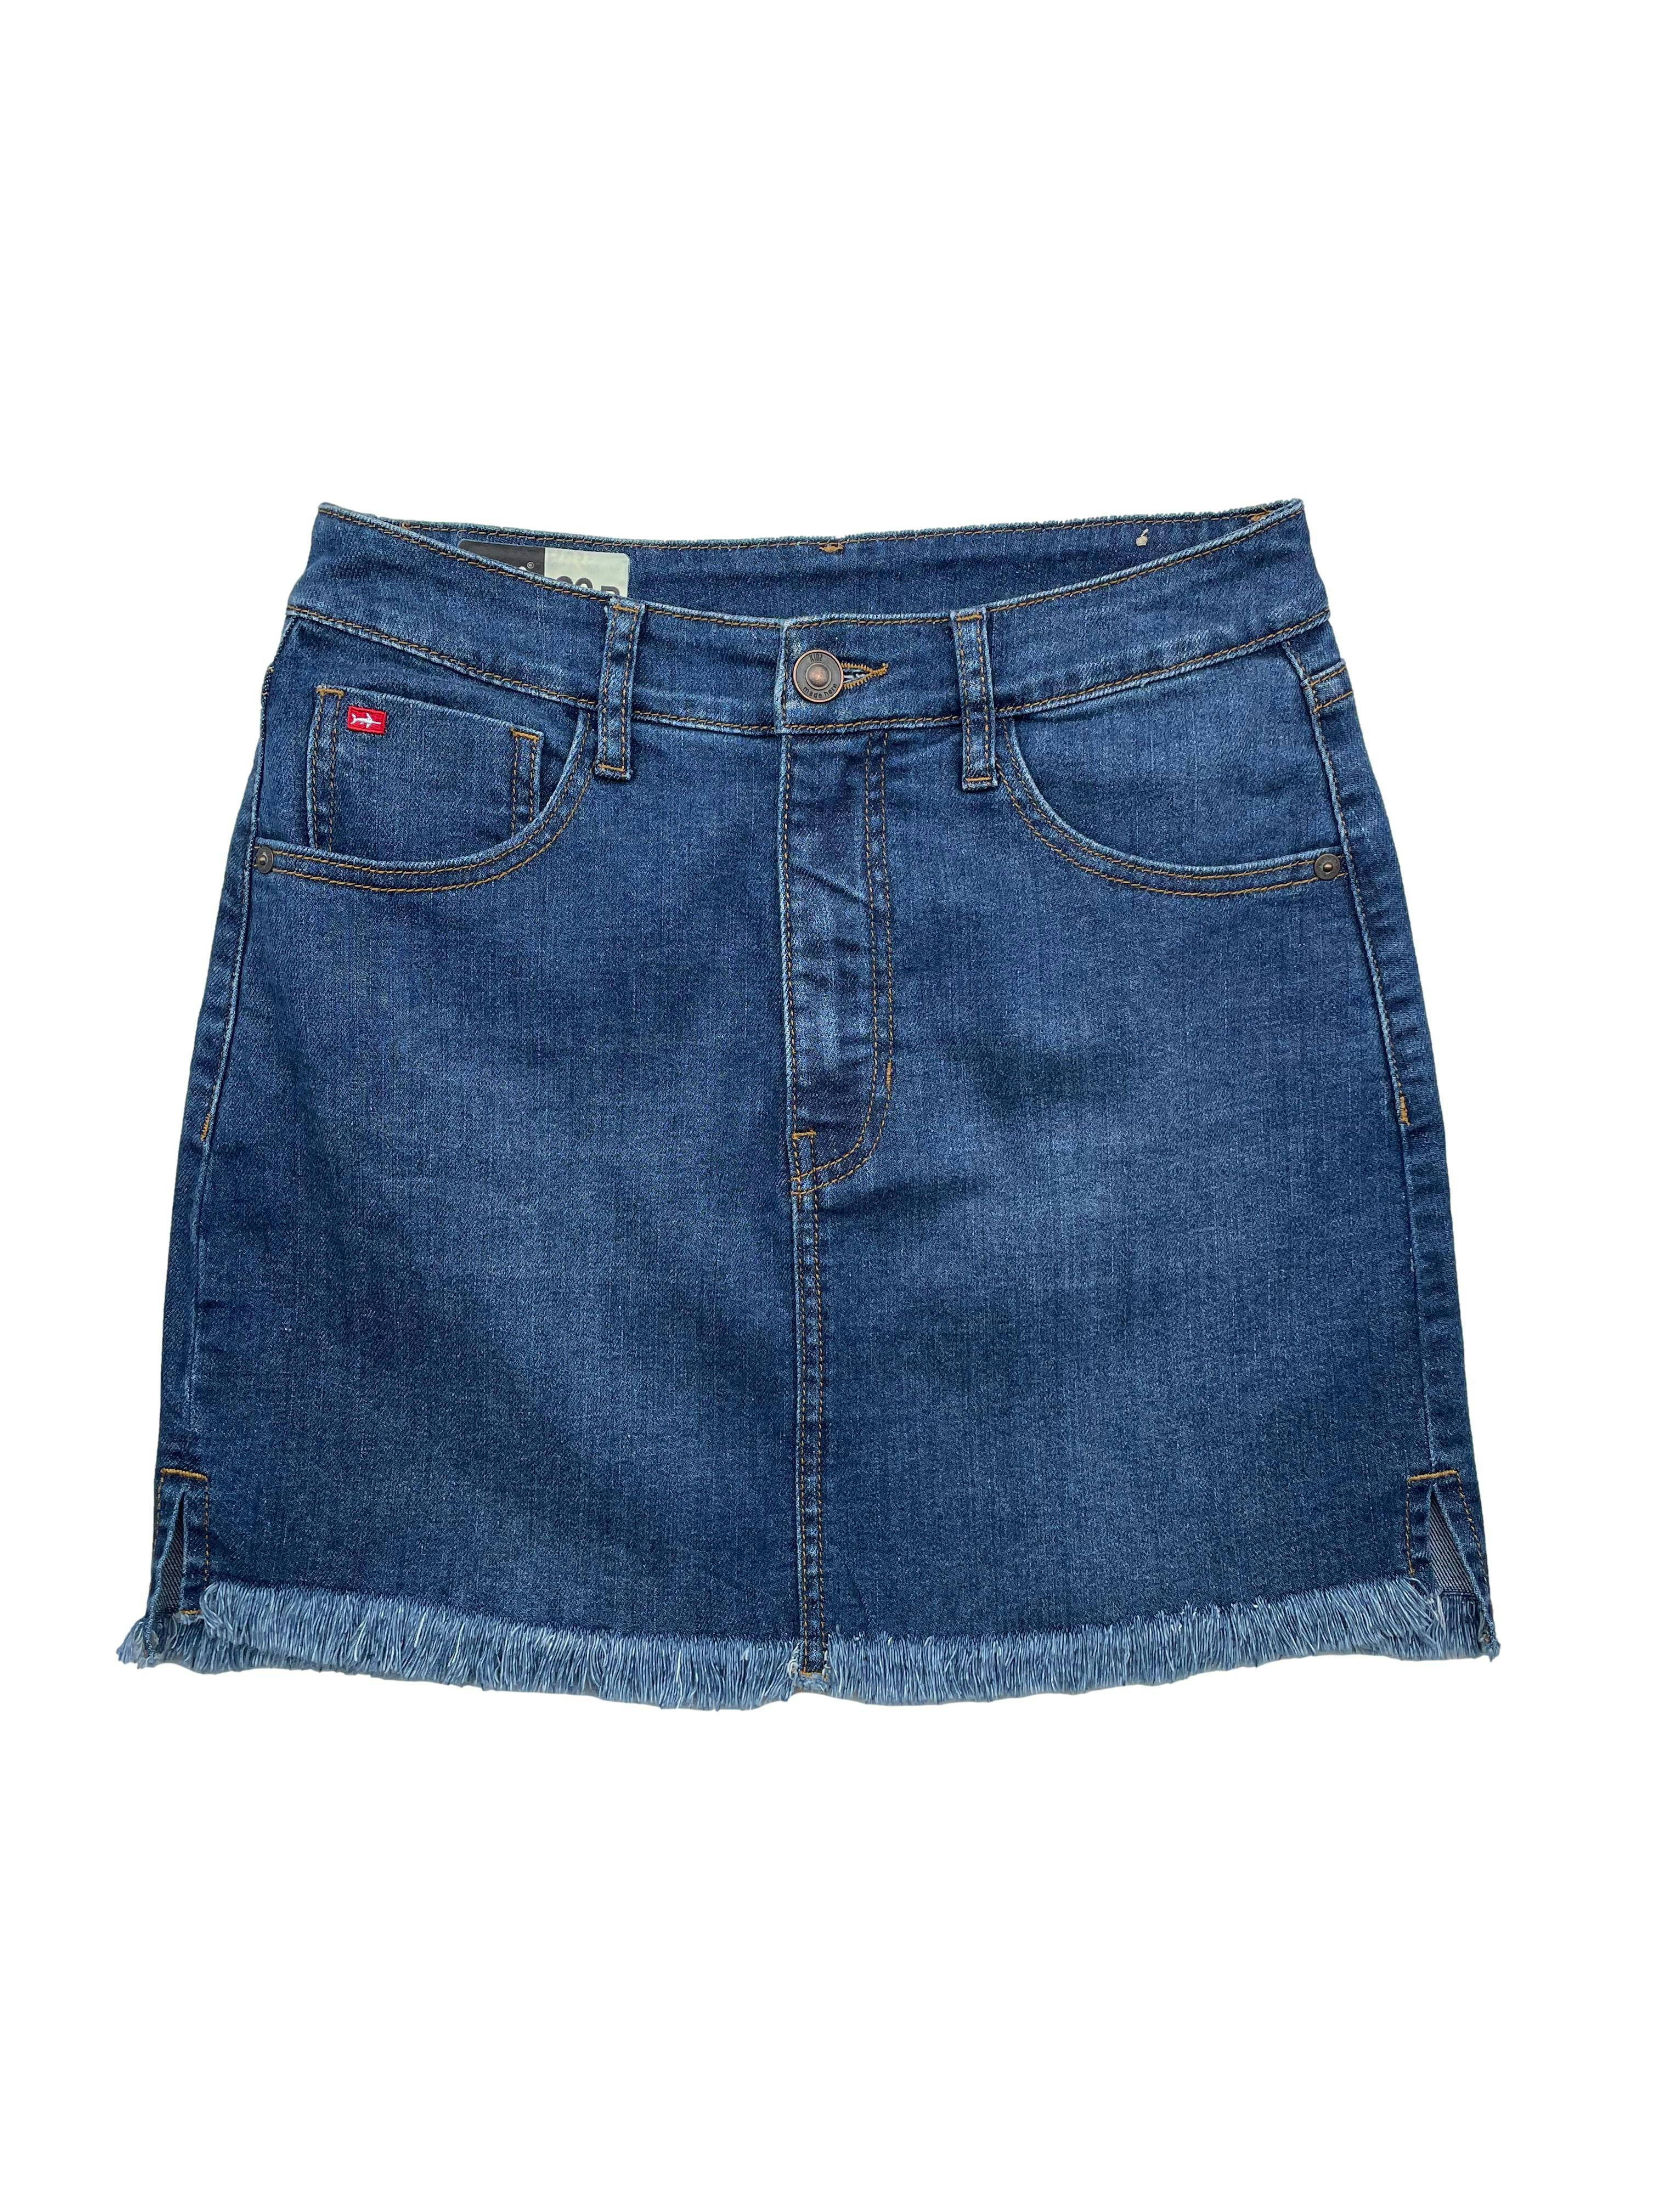 Falda Kids made here de jean ligeramente stretch, con 5 bolsillos, basta desflecada y aberturas laterales. Cintura 68cm, Largo 40cm.